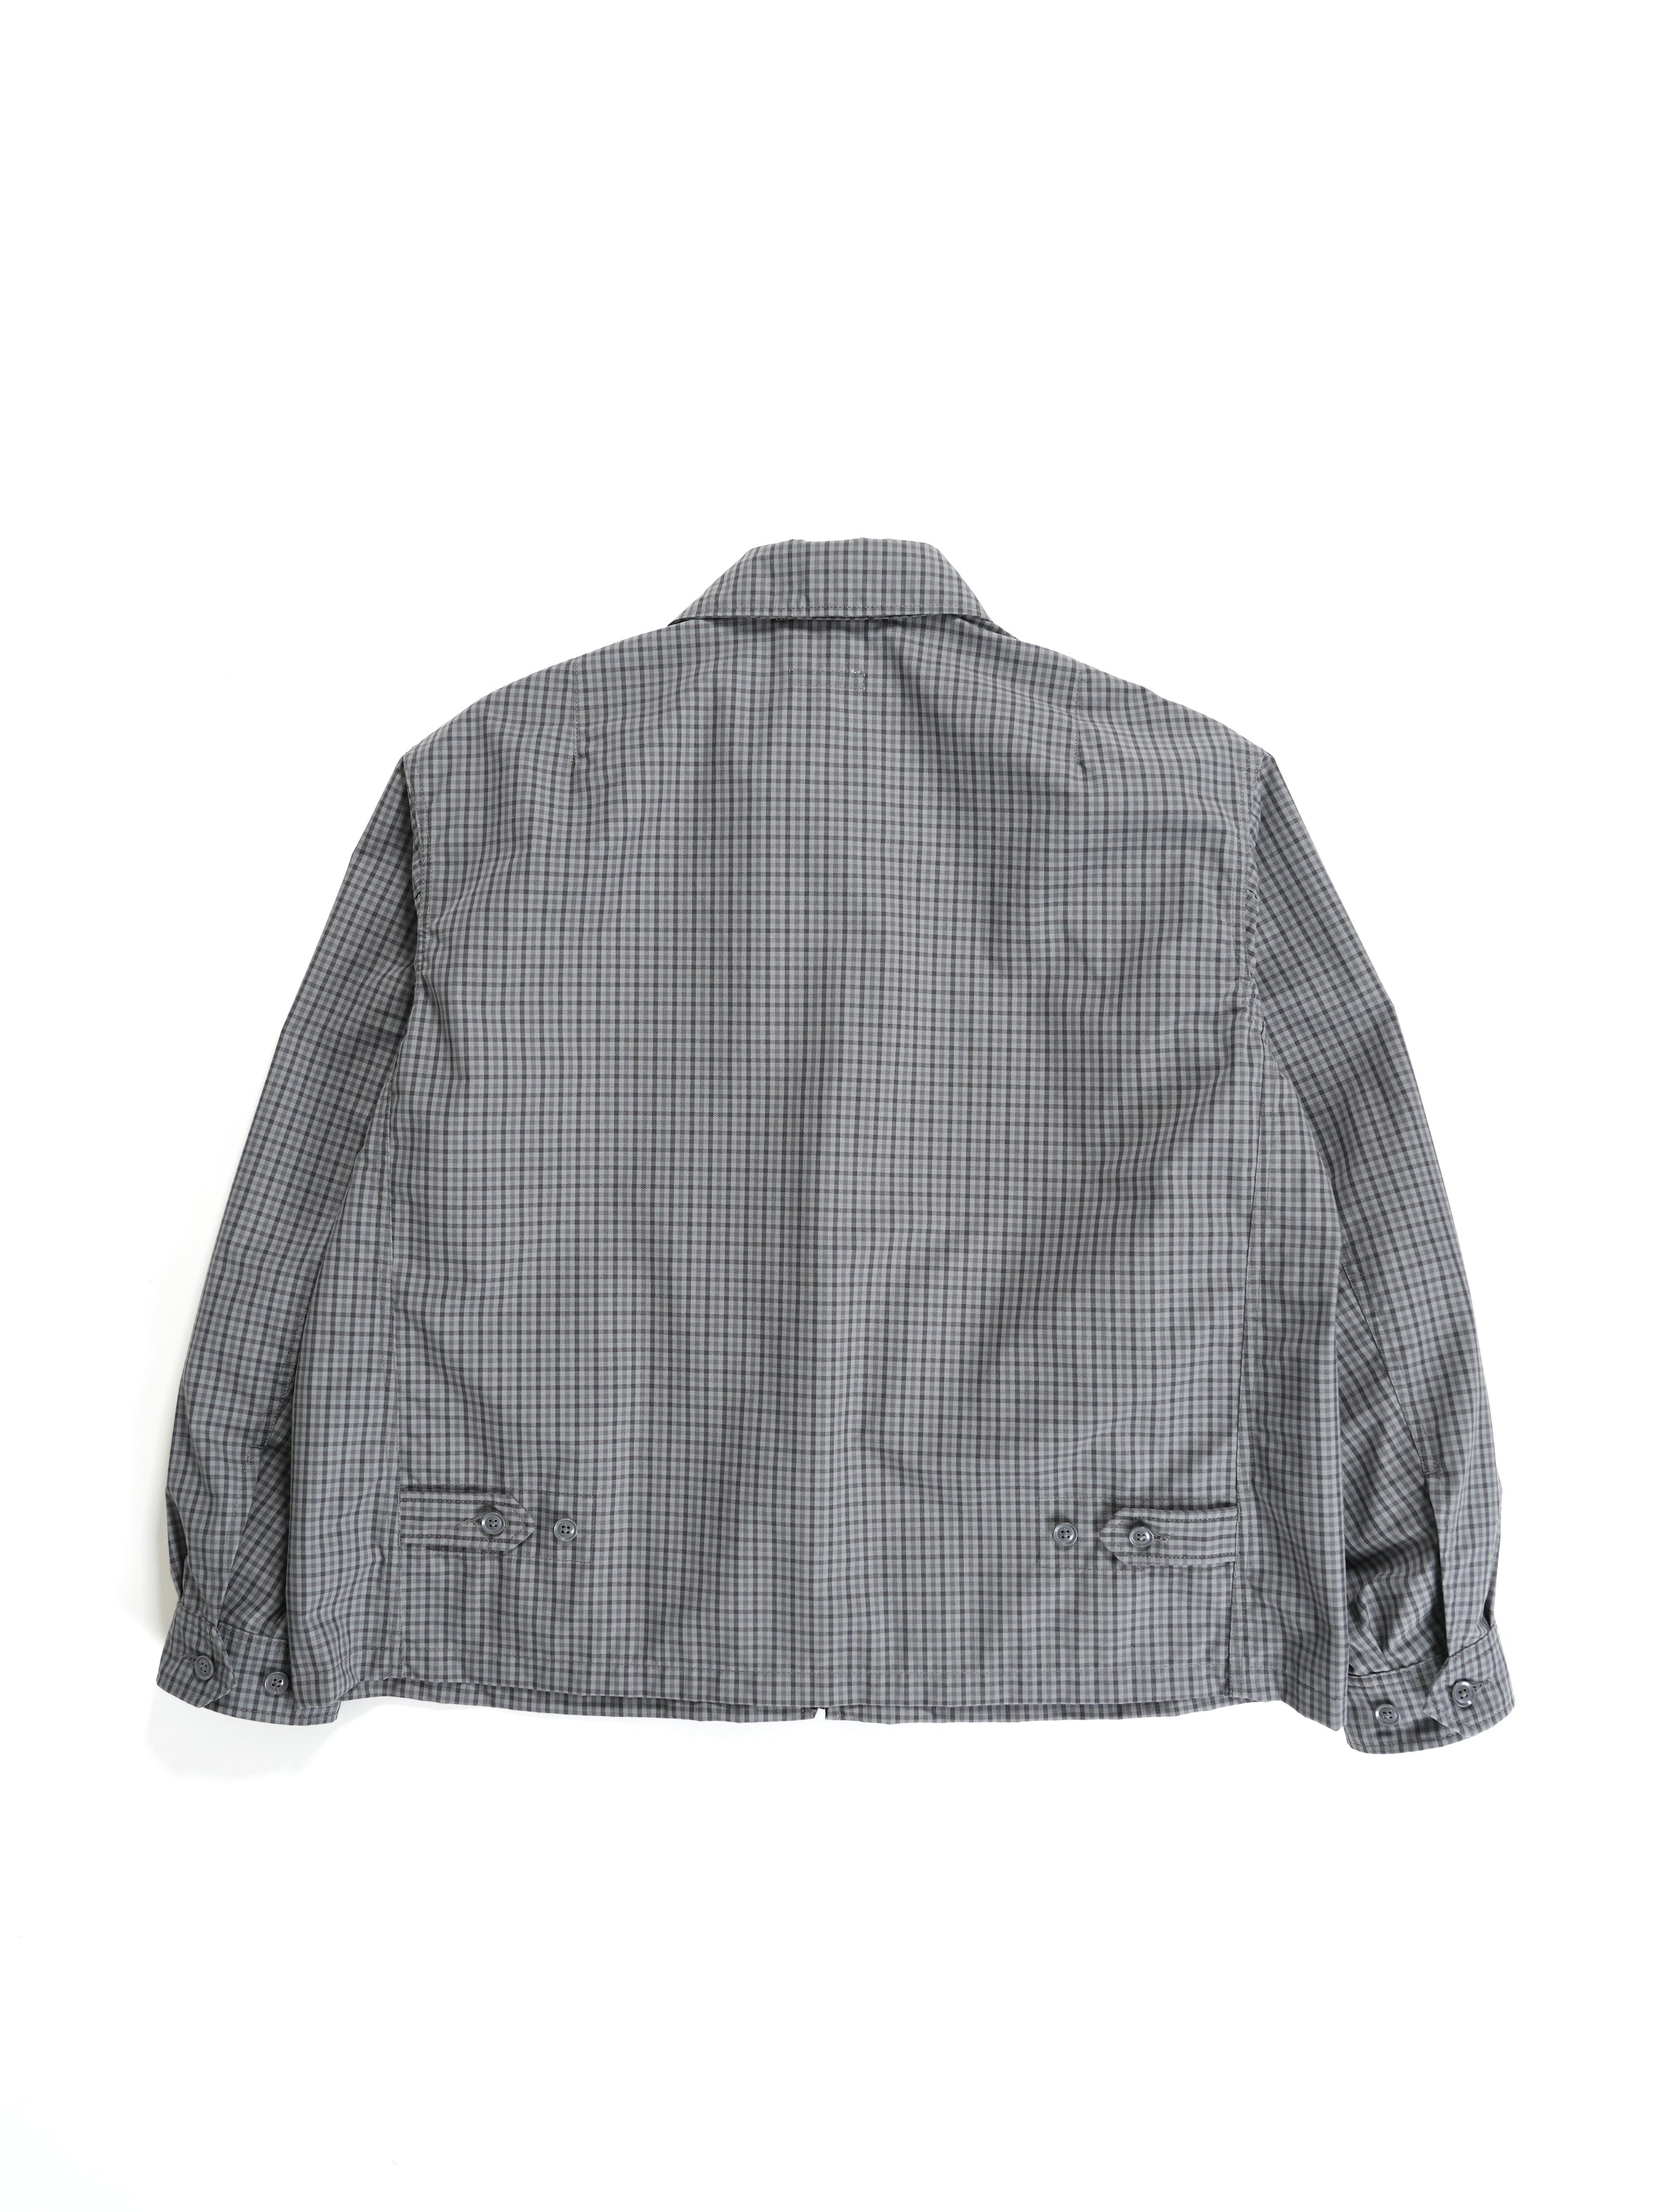 Engineered Garments Claigton Jacket - Grey PC Gunclub Check